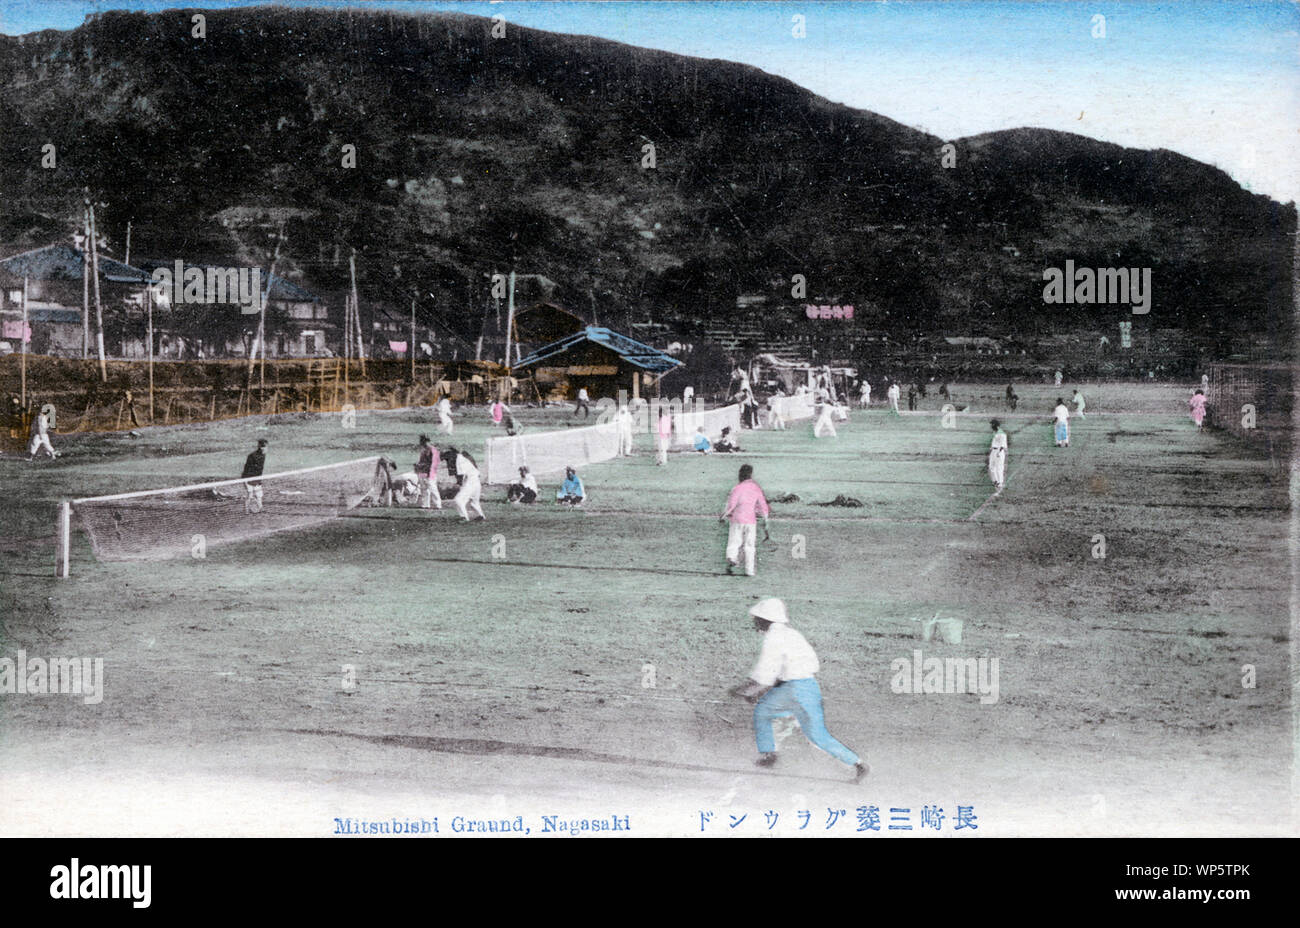 [ 1910s Japan - Tennis Courts in Nagasaki ] —   Tennis courts at Mitsubishi Ground in Nagasaki.  20th century vintage postcard. Stock Photo